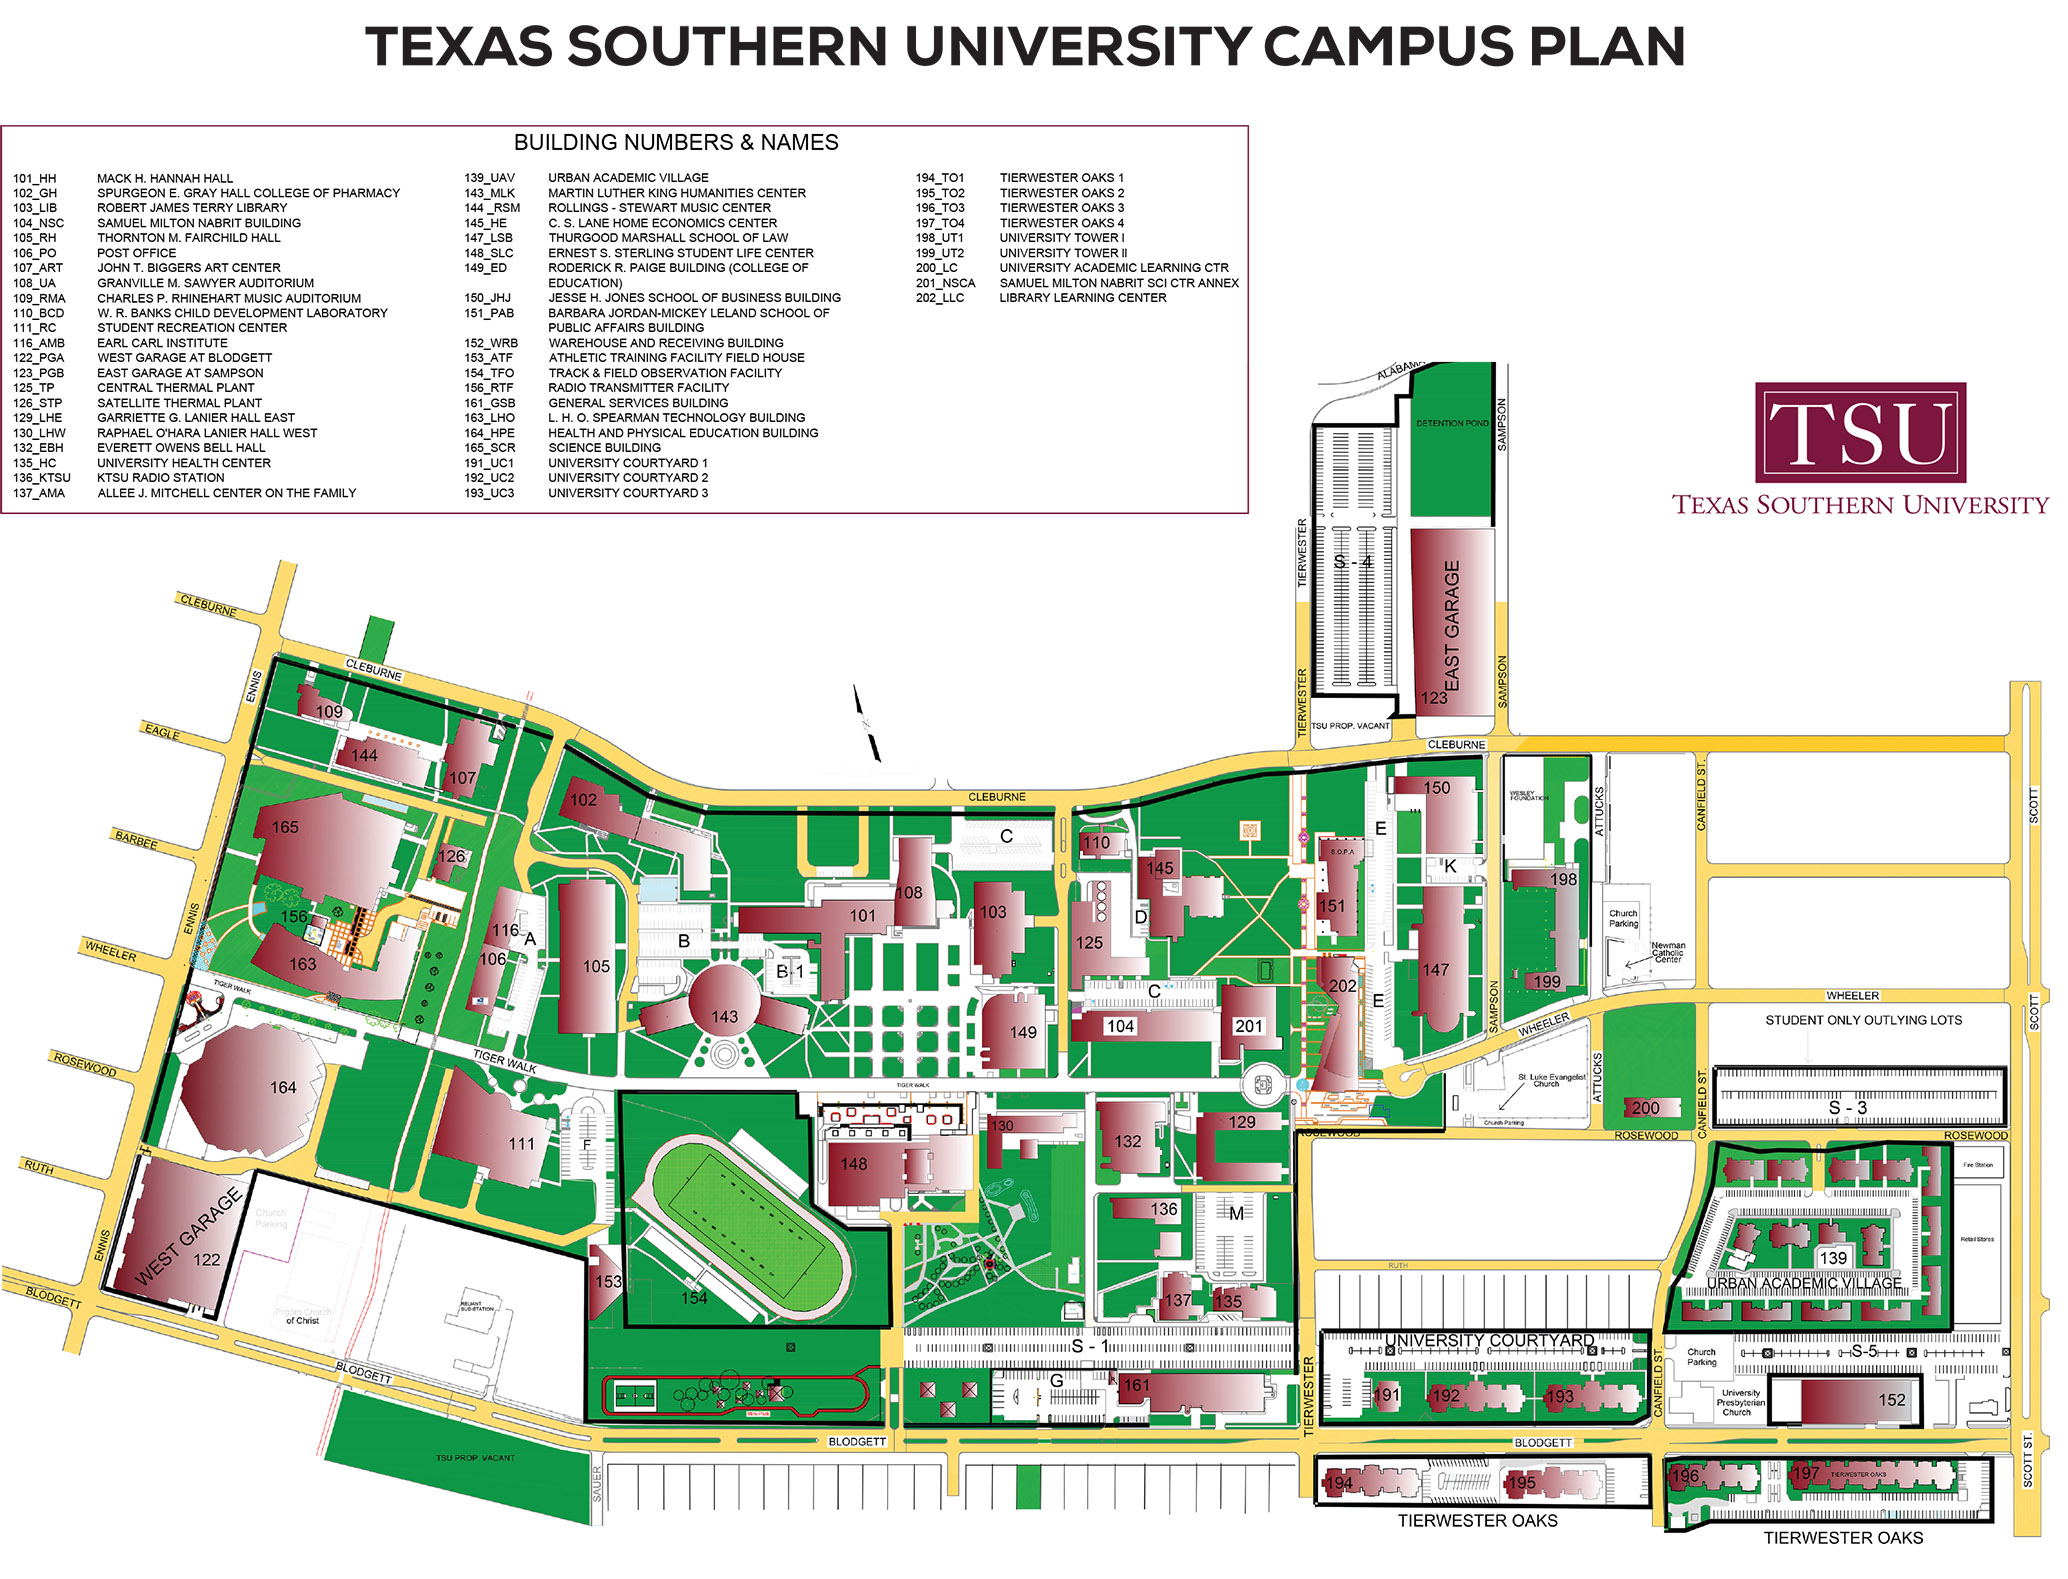 Link to tsu-campus-map image